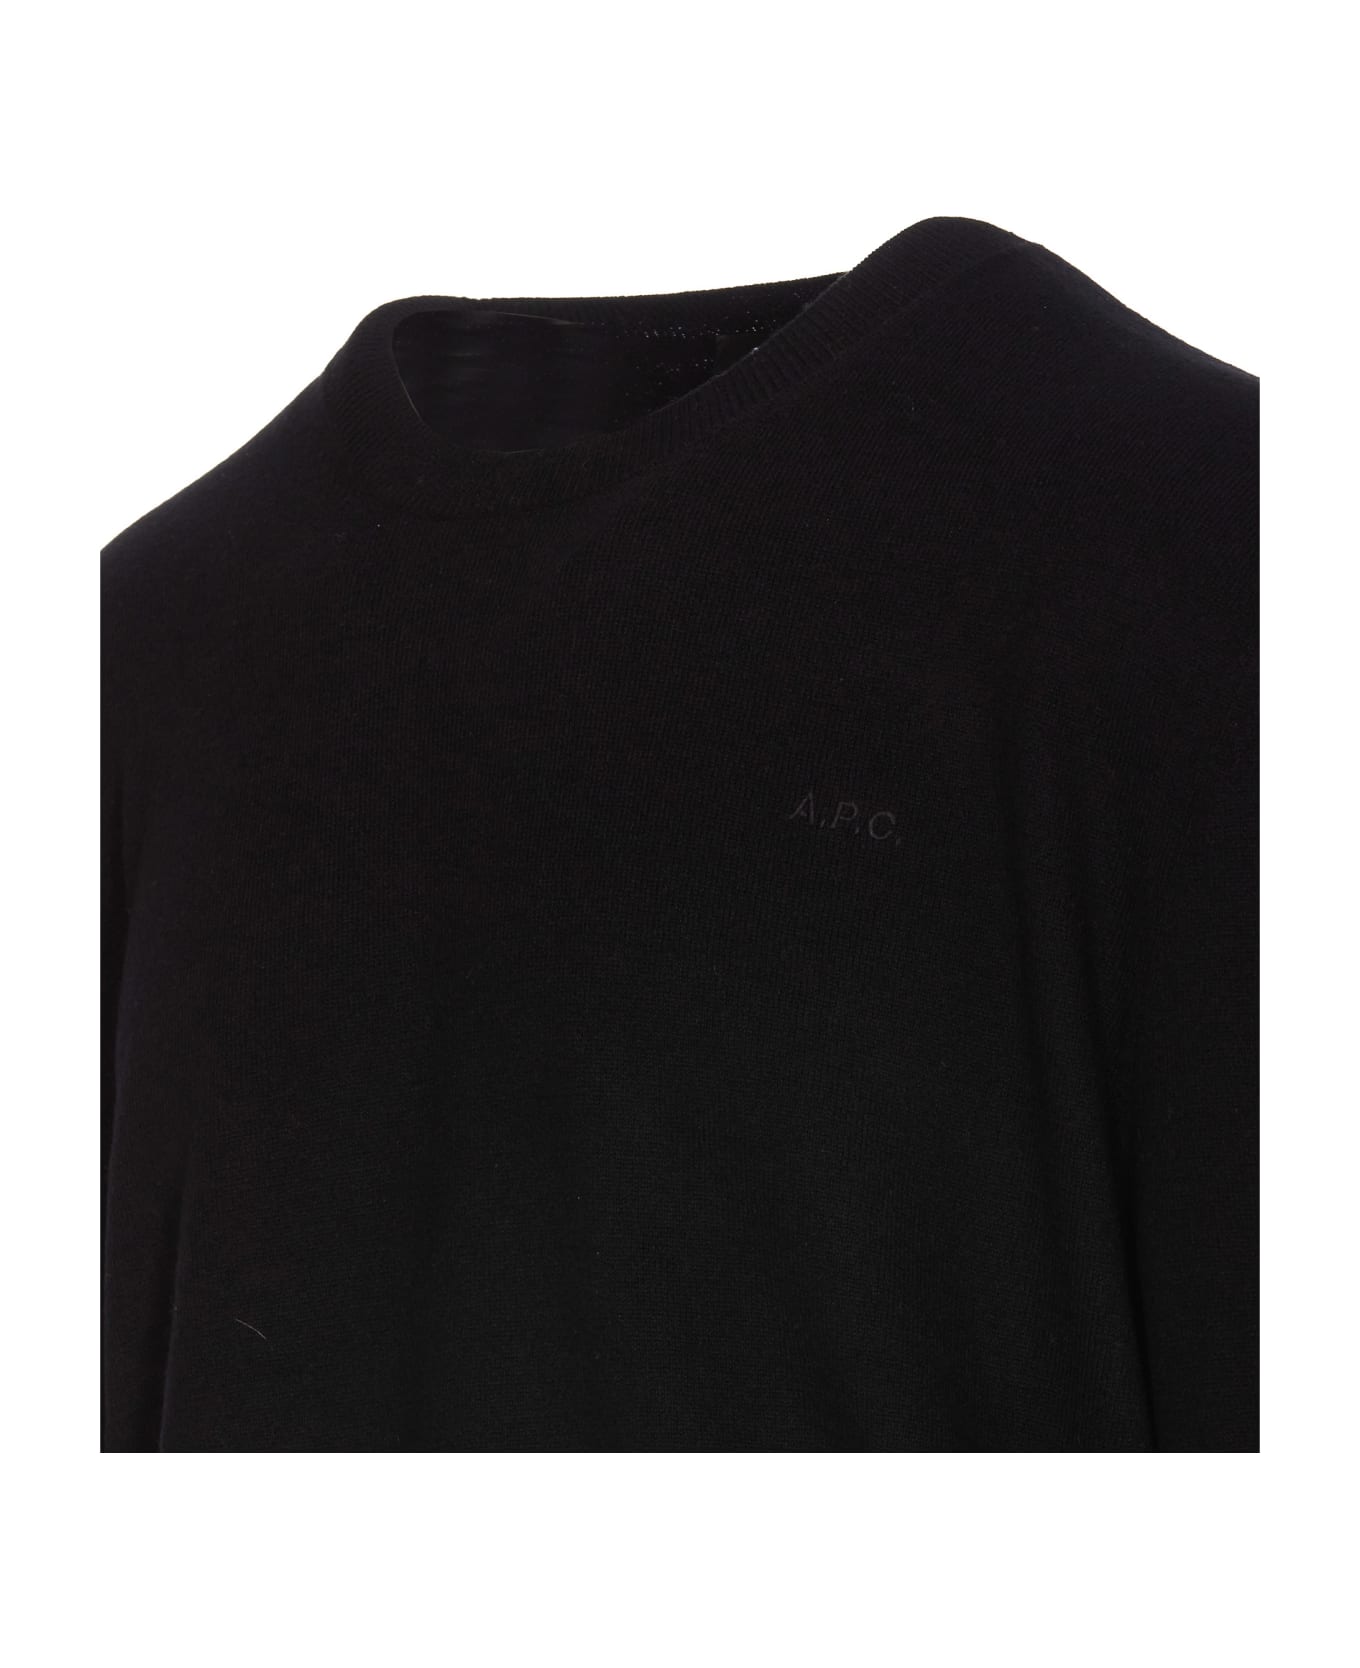 A.P.C. Sweater - Black